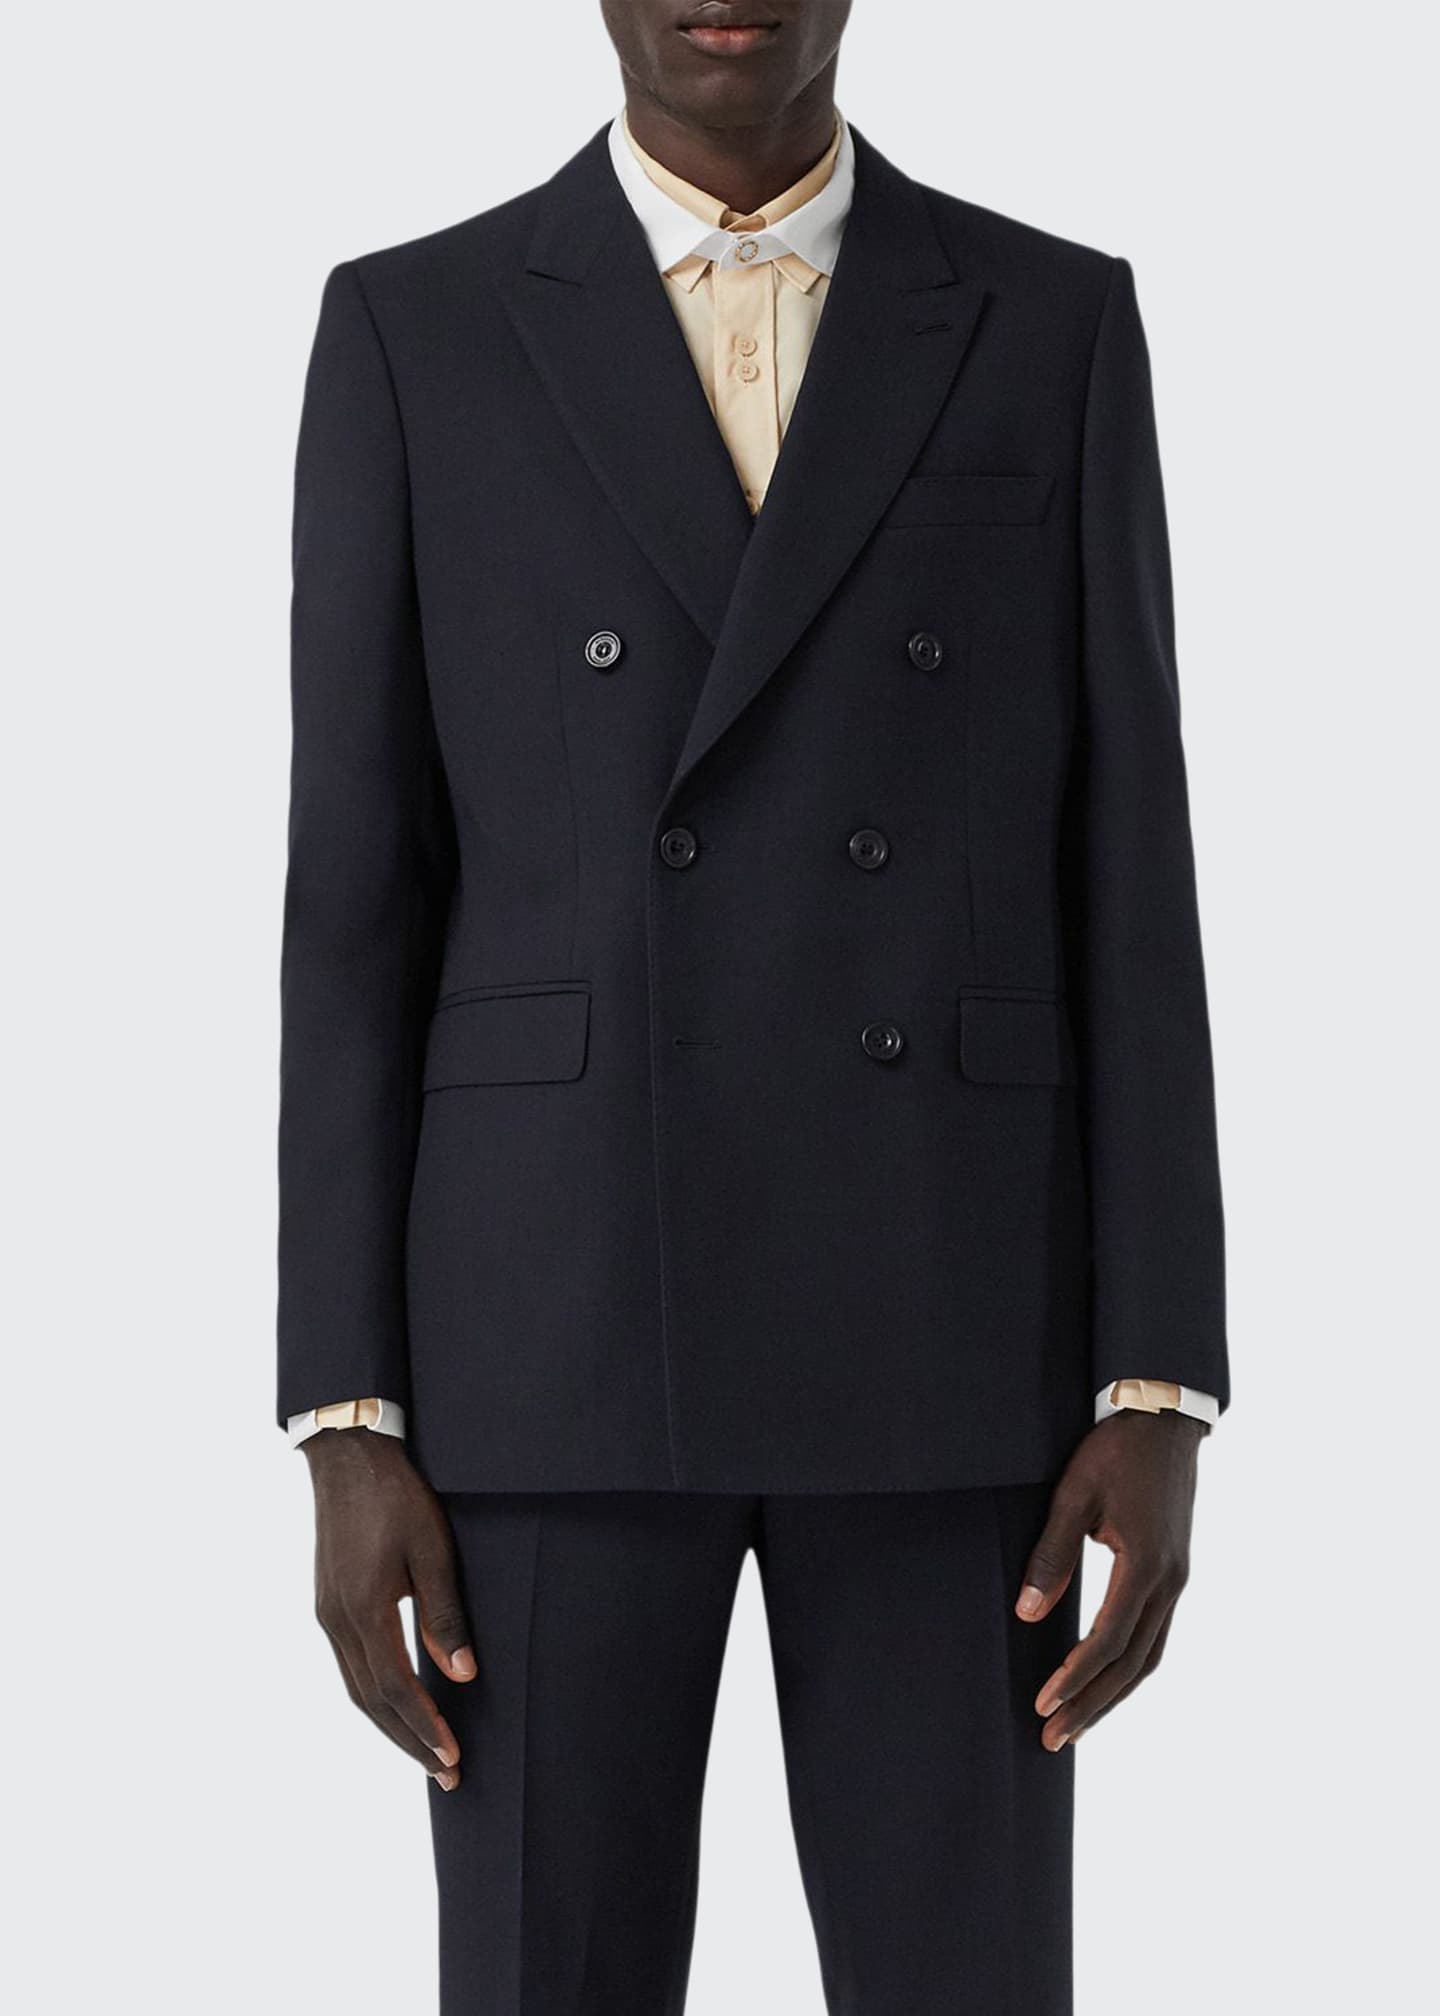 Burberry Men's Double-Breasted Suit Jacket - Bergdorf Goodman